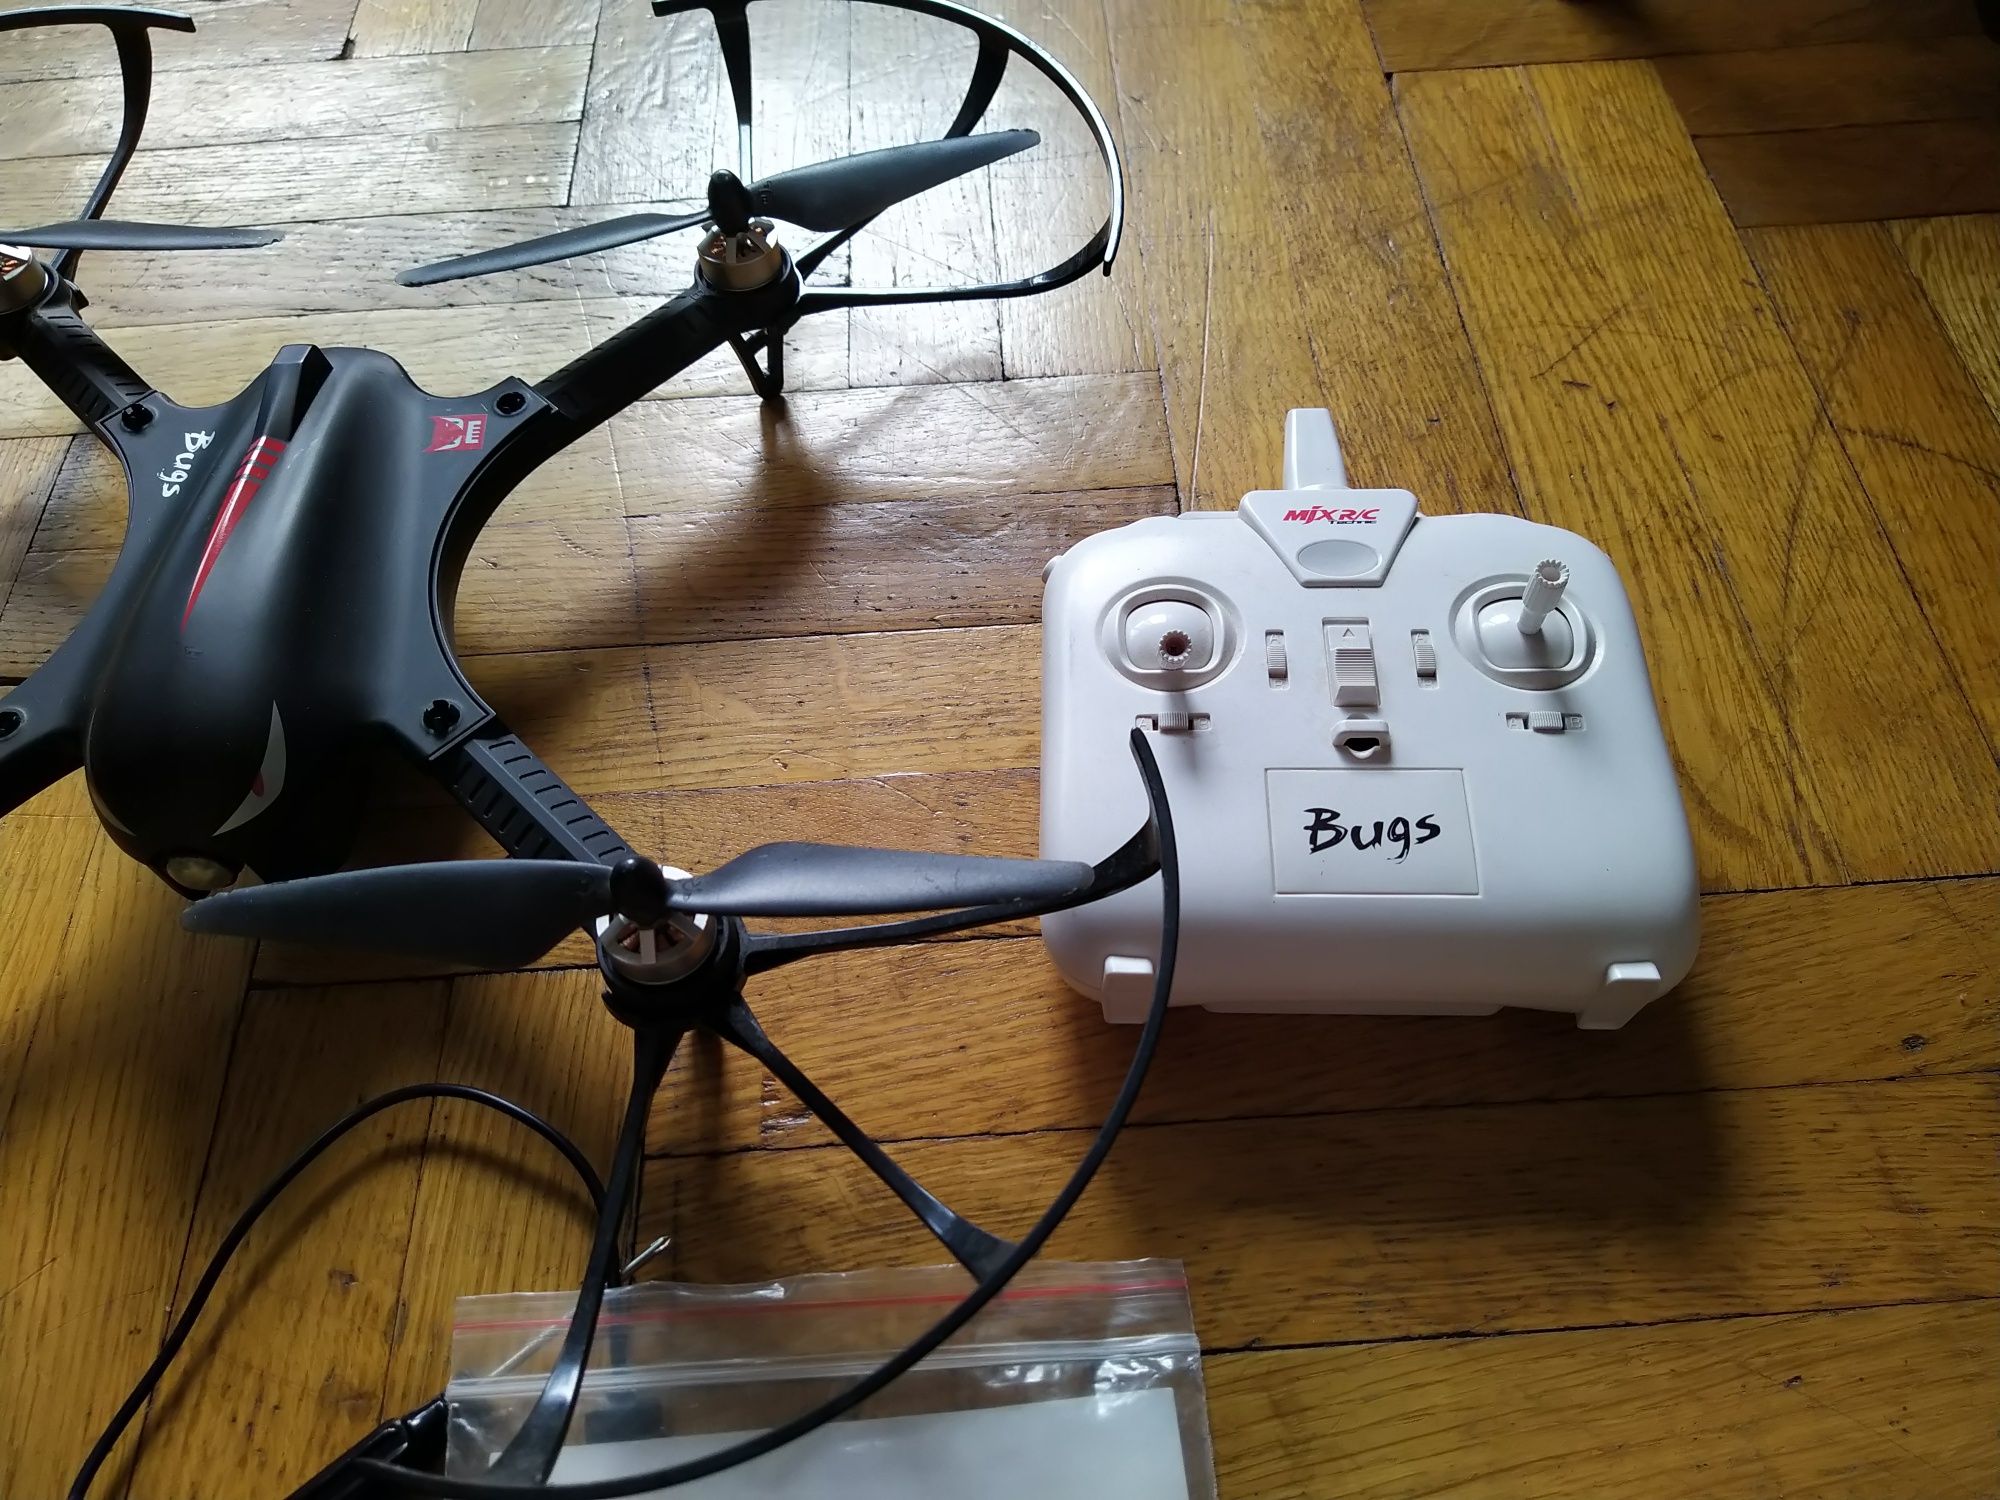 Dron mjx Bugs 3 + 2 baterie 1800mAh